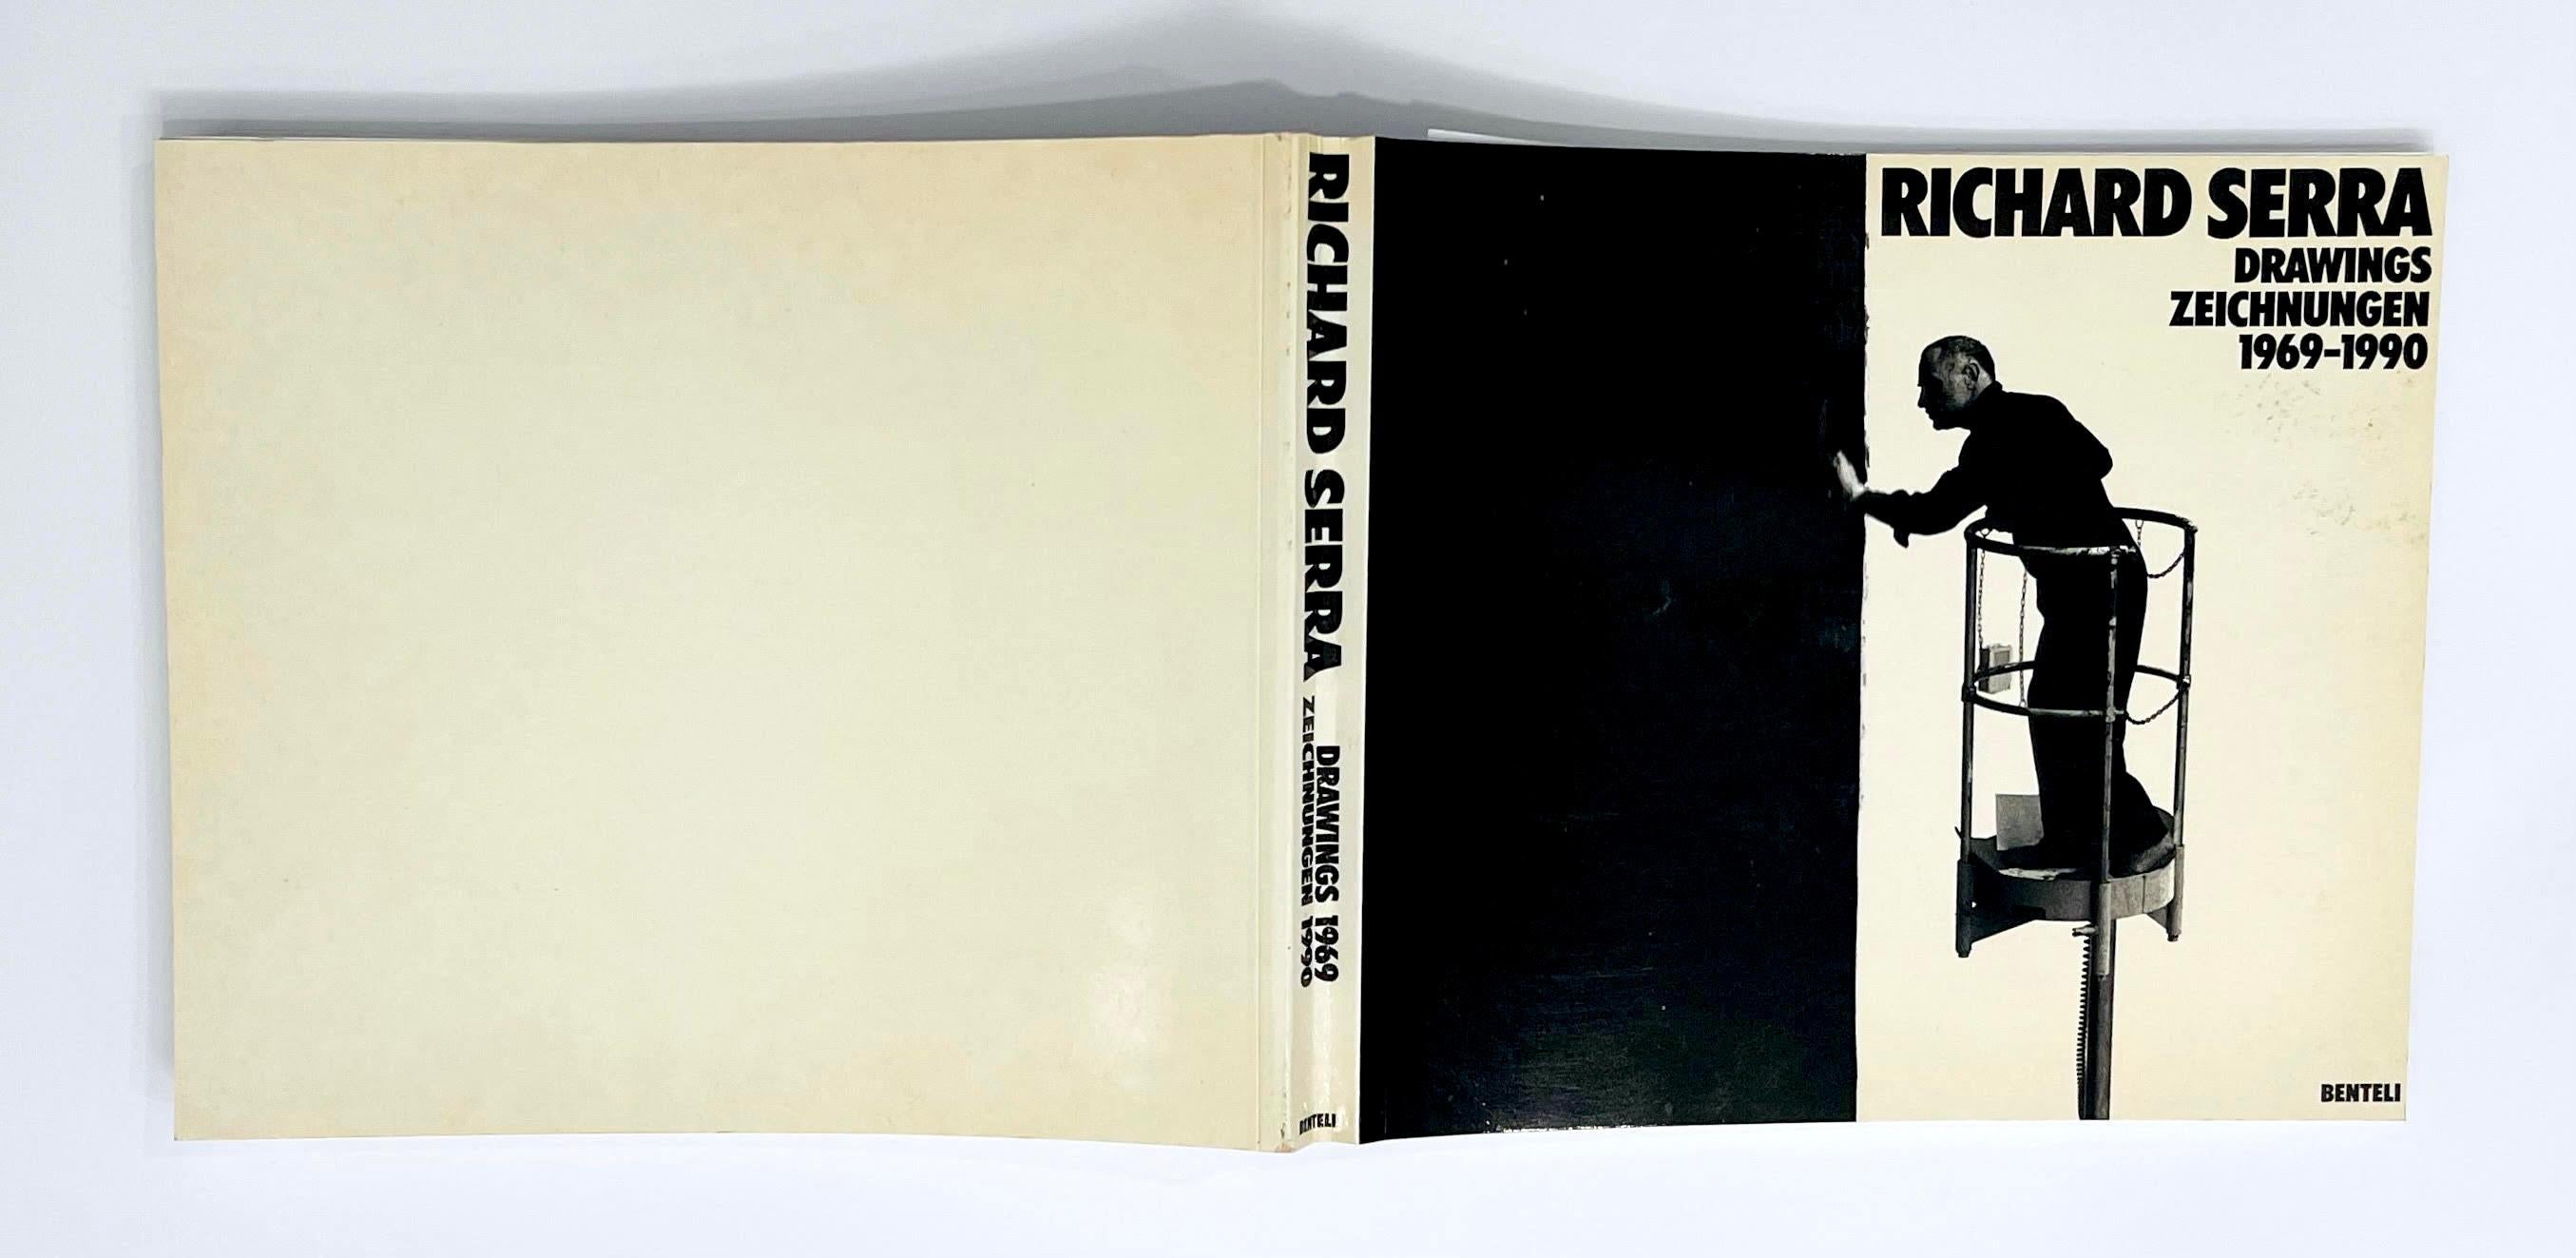 Richard Serra Drawings Zeichnungen 1969-1990 Book (Hand signed by Richard Serra) For Sale 2